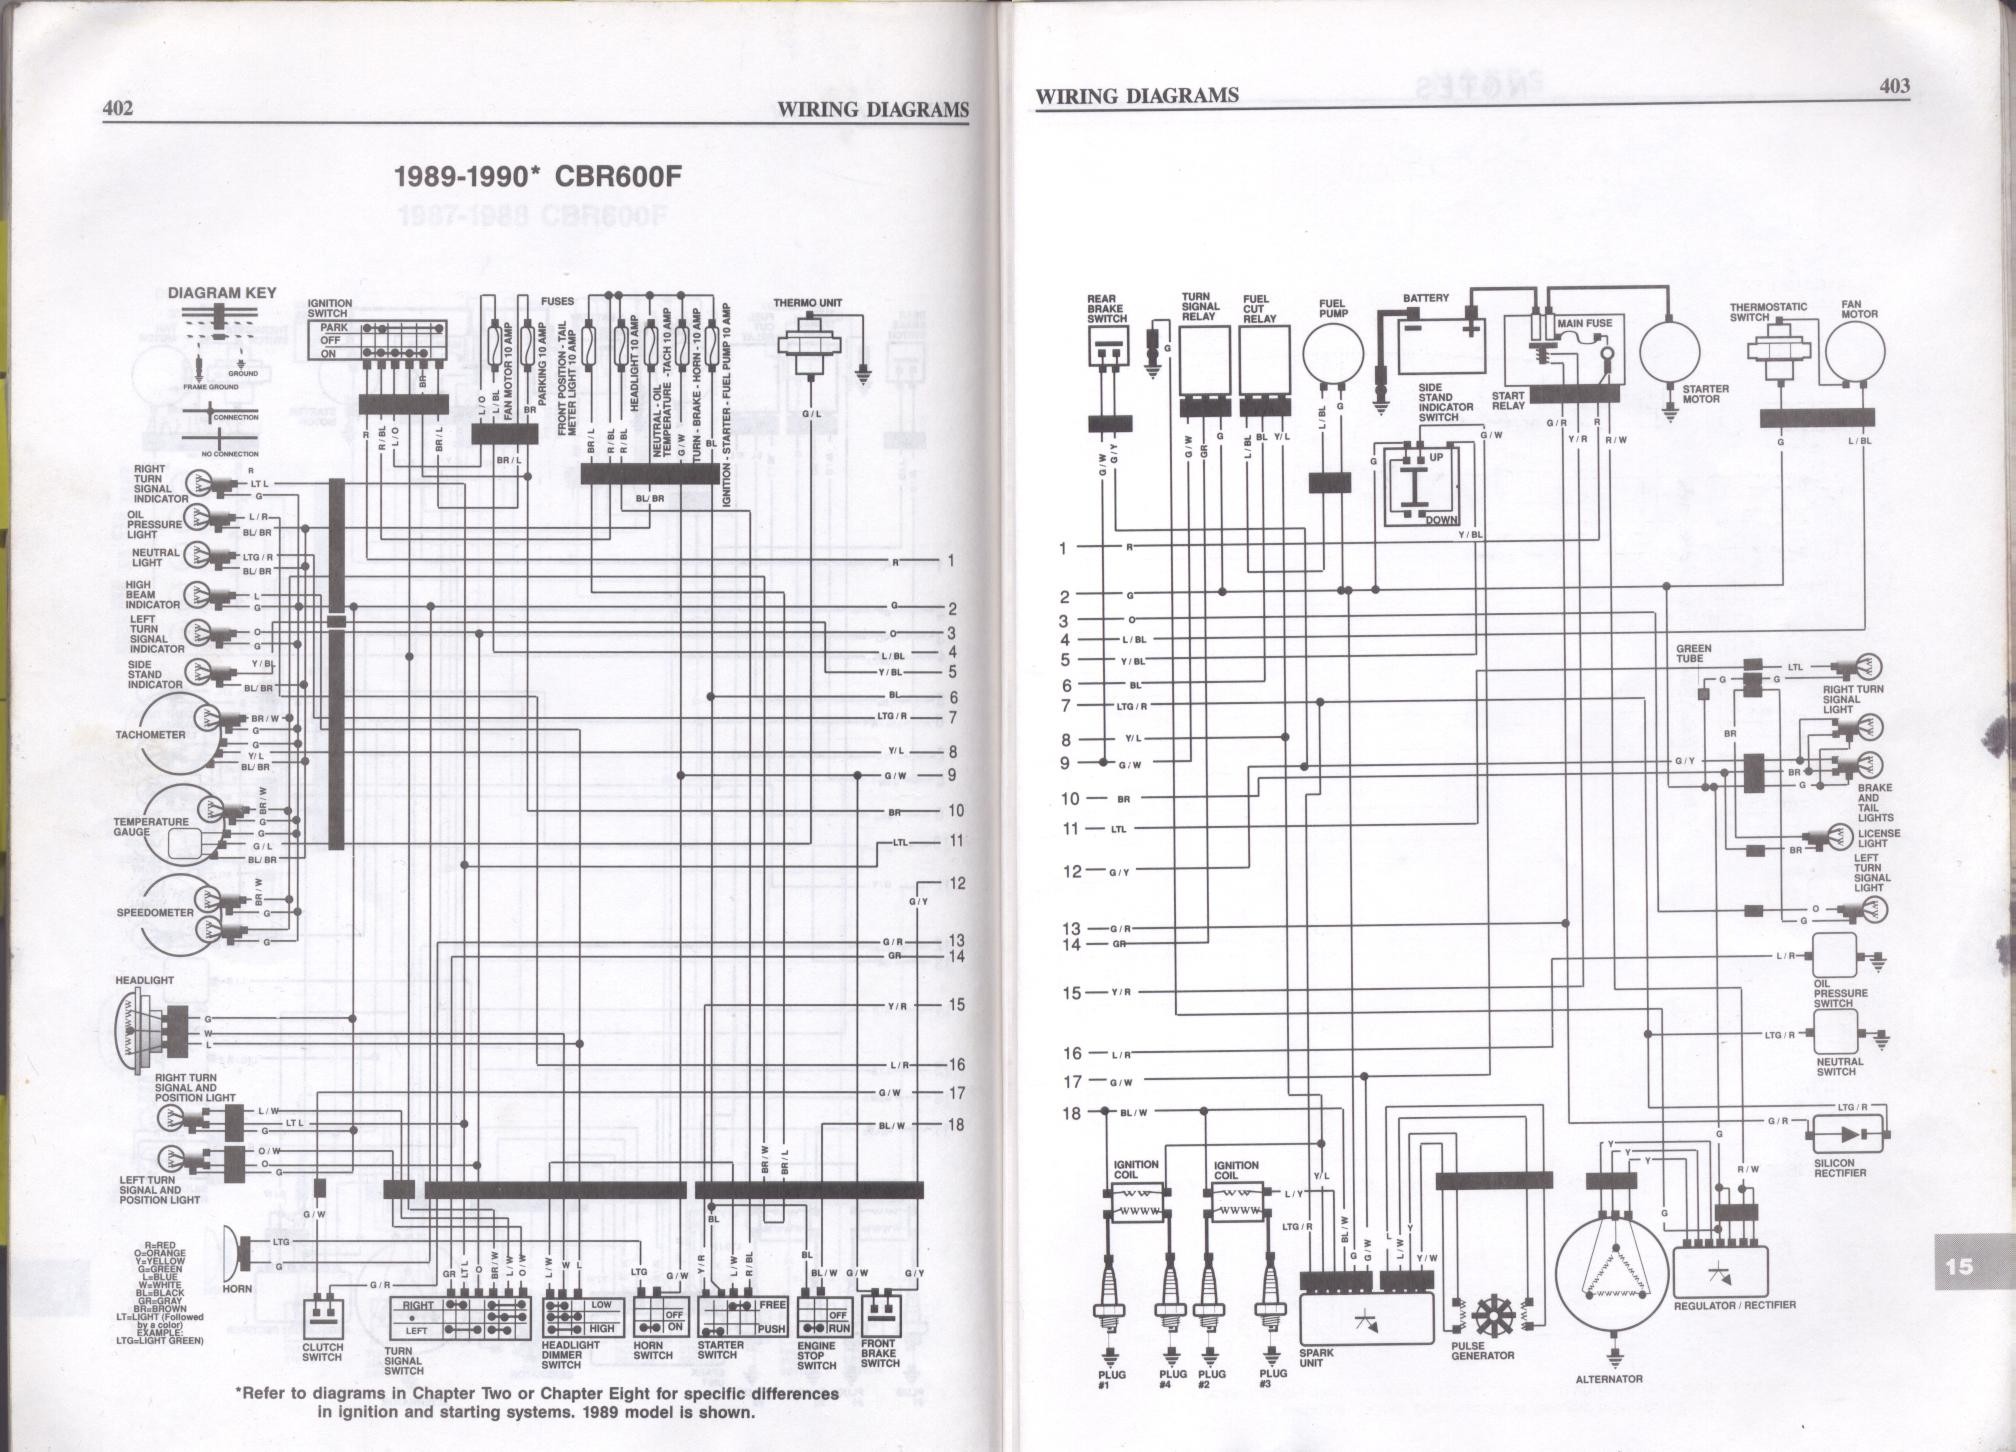 1978 Honda Xl 125 Wiring Diagram Honda Cb 900 Wiring Diagram Honda Wiring Diagrams Instructions Of 1978 Honda Xl 125 Wiring Diagram